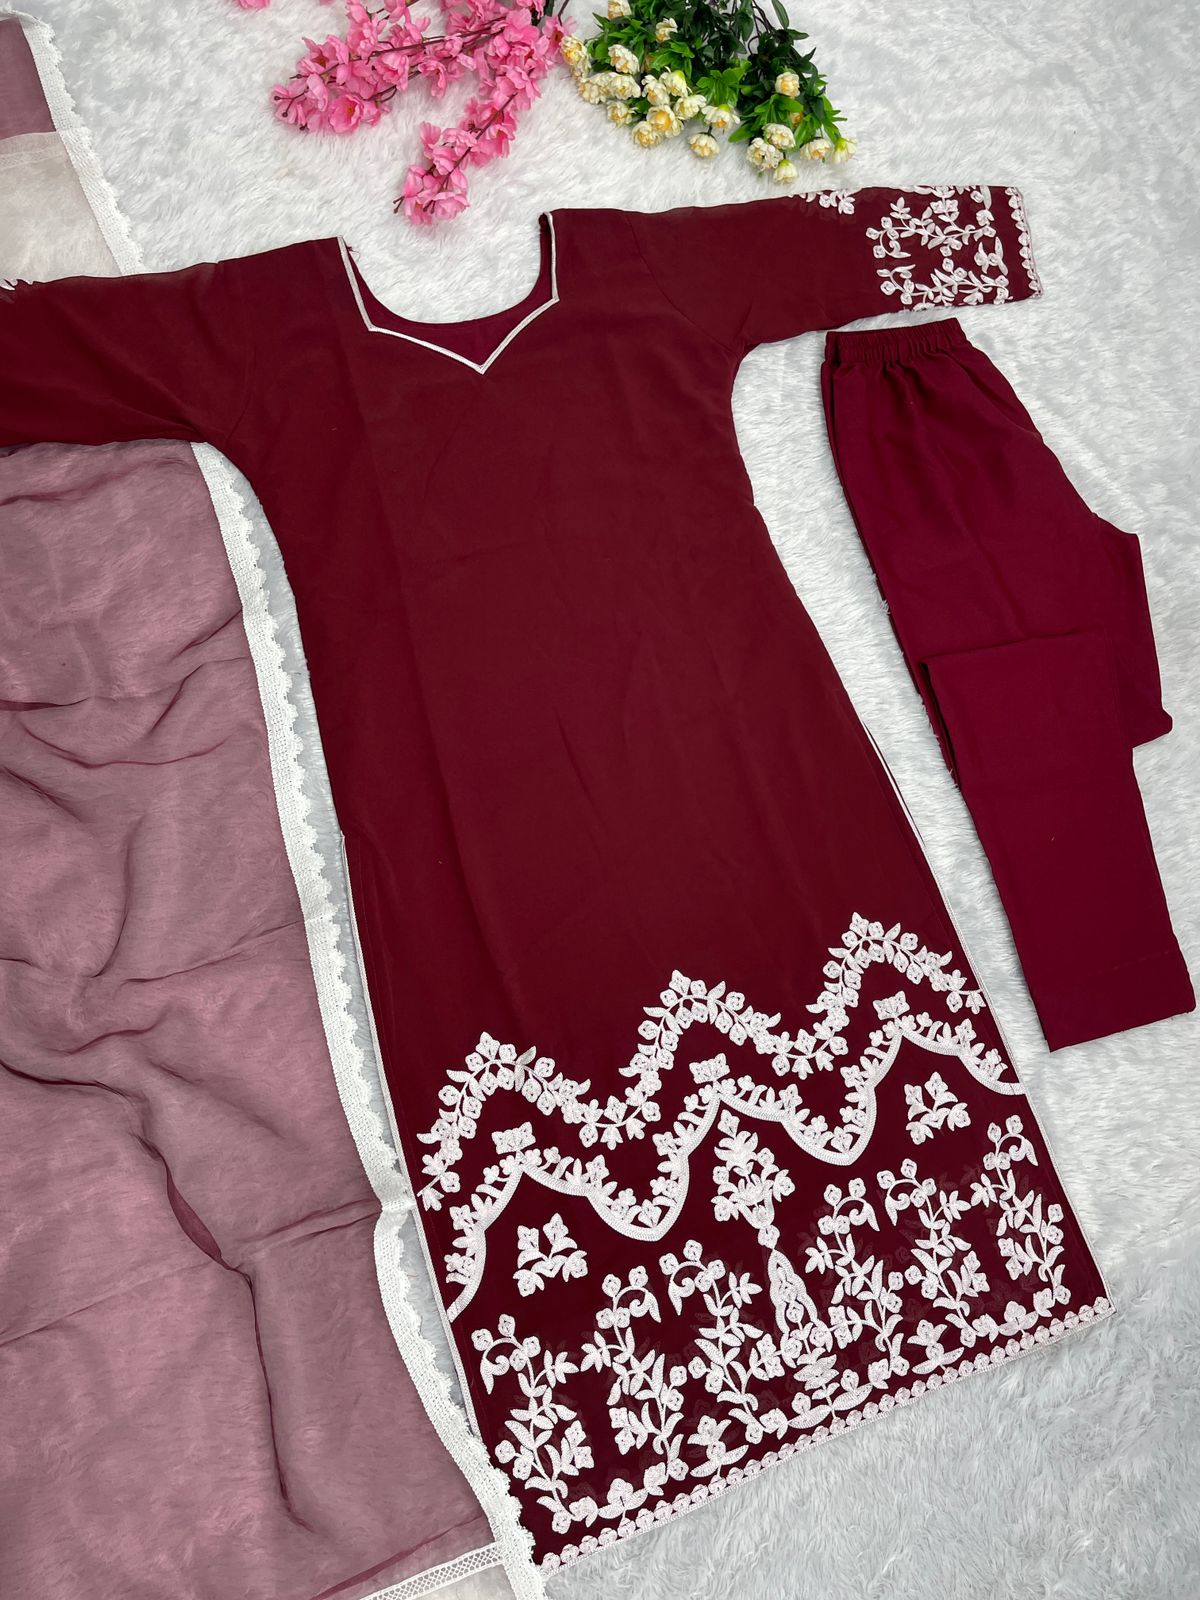 Fantastic Fully Stitched Maroon Color Salwar Suit